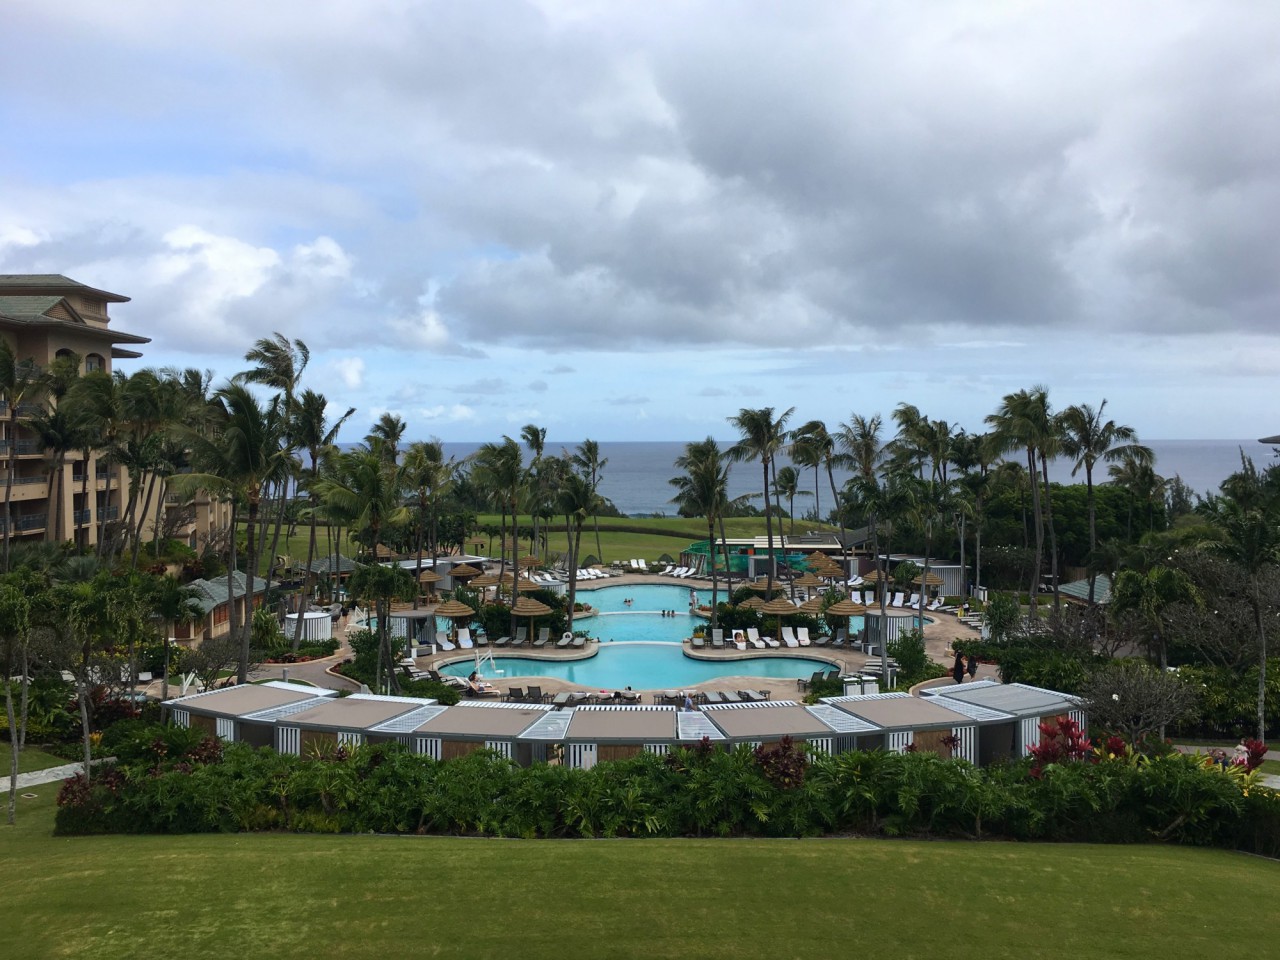 2019 Review: The Ritz-Carlton Kapalua, Maui